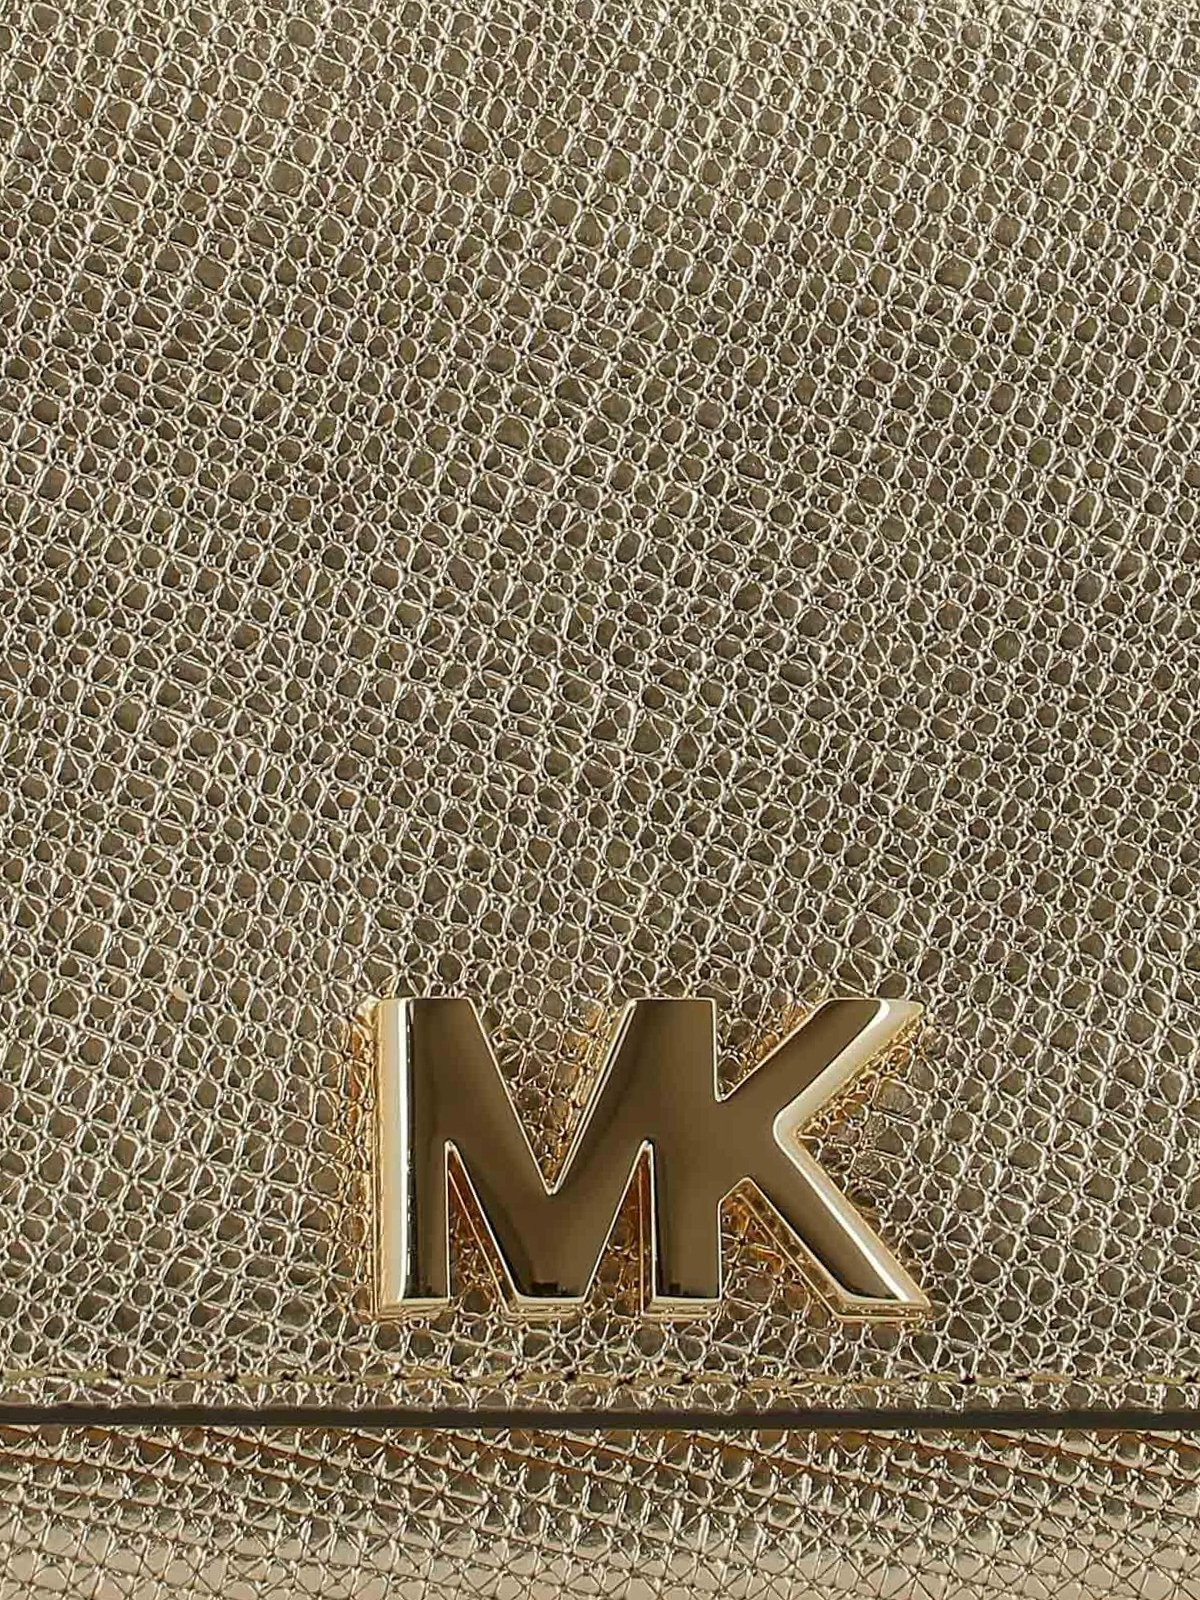 Mott MK logo gold leather clutch 